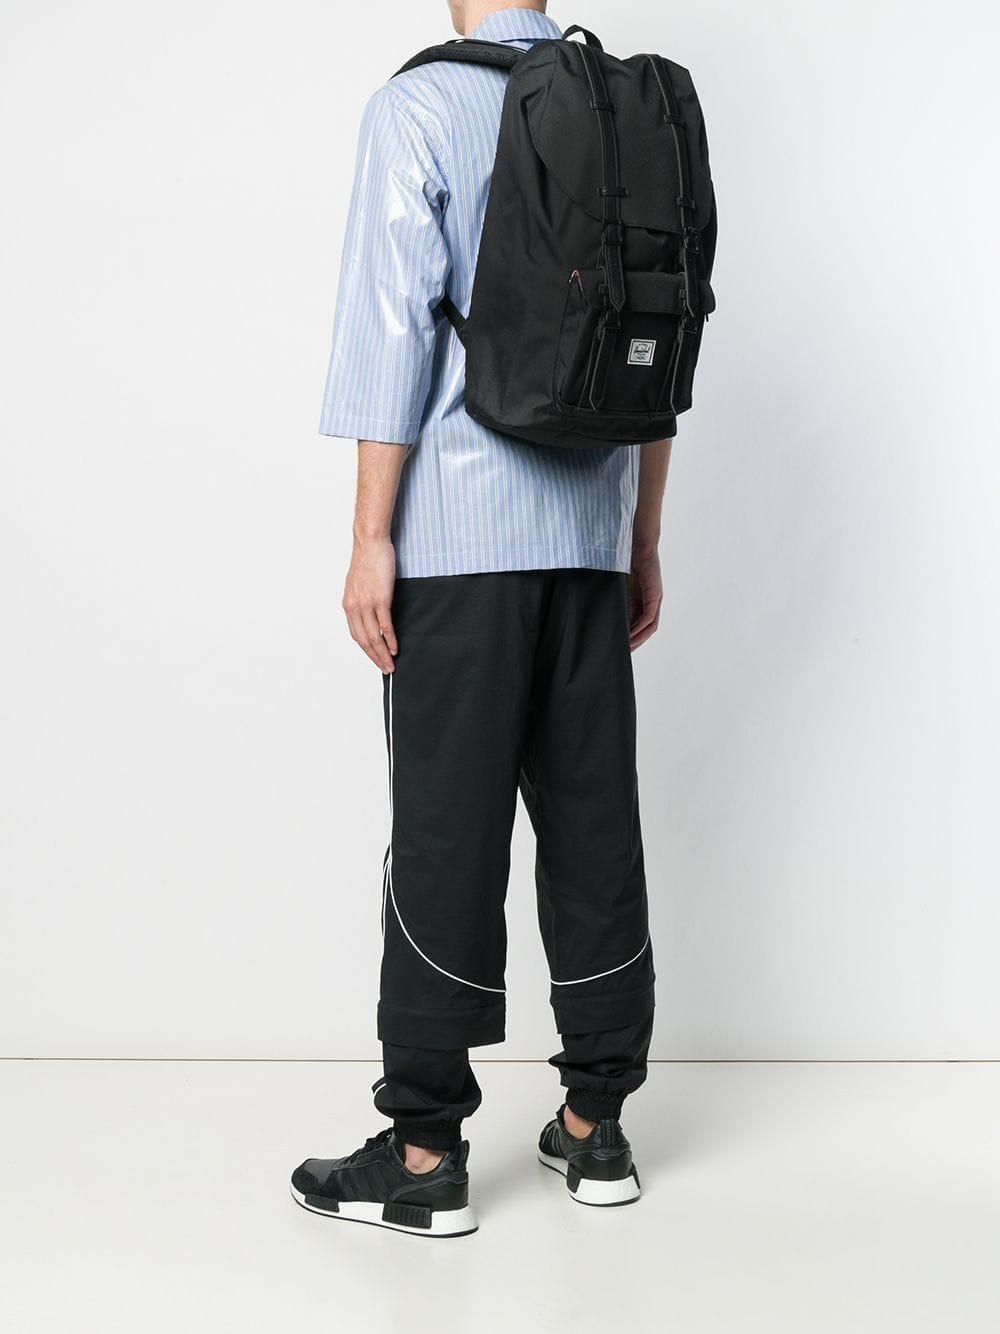 Herschel Supply Co. Double Buckle Backpack in Black for Men - Lyst